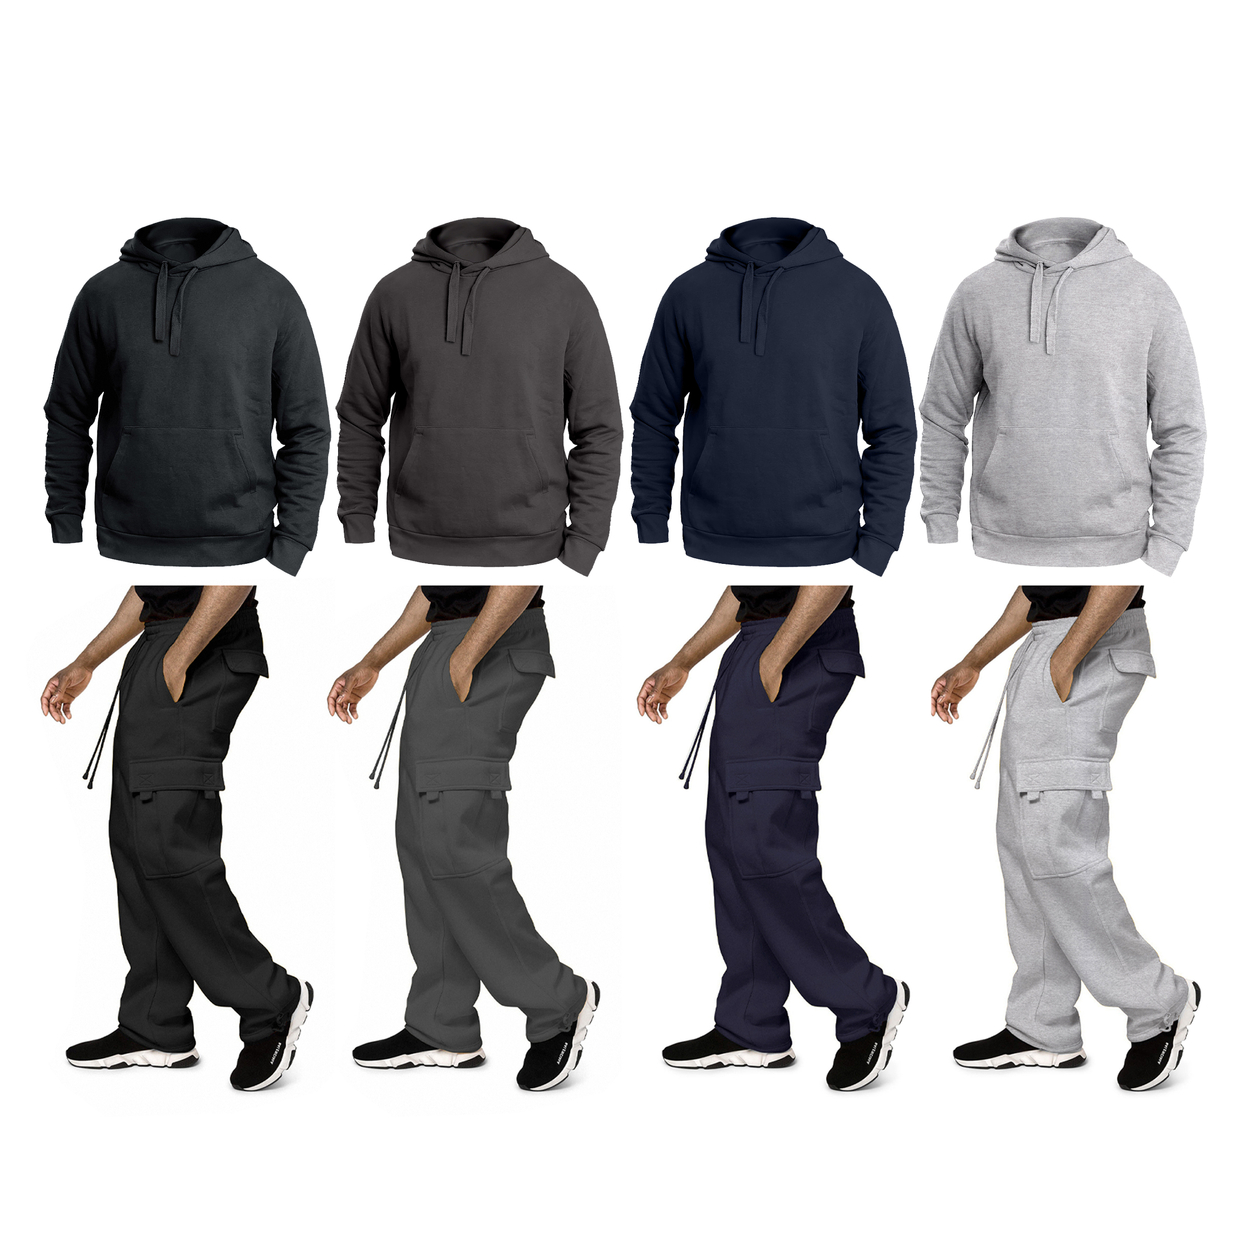 Multi-Pack: Big & Tall Men's Winter Warm Cozy Athletic Fleece Lined Multi-Pocket Cargo Sweatsuit - Navy, 2-pack, Xx-large